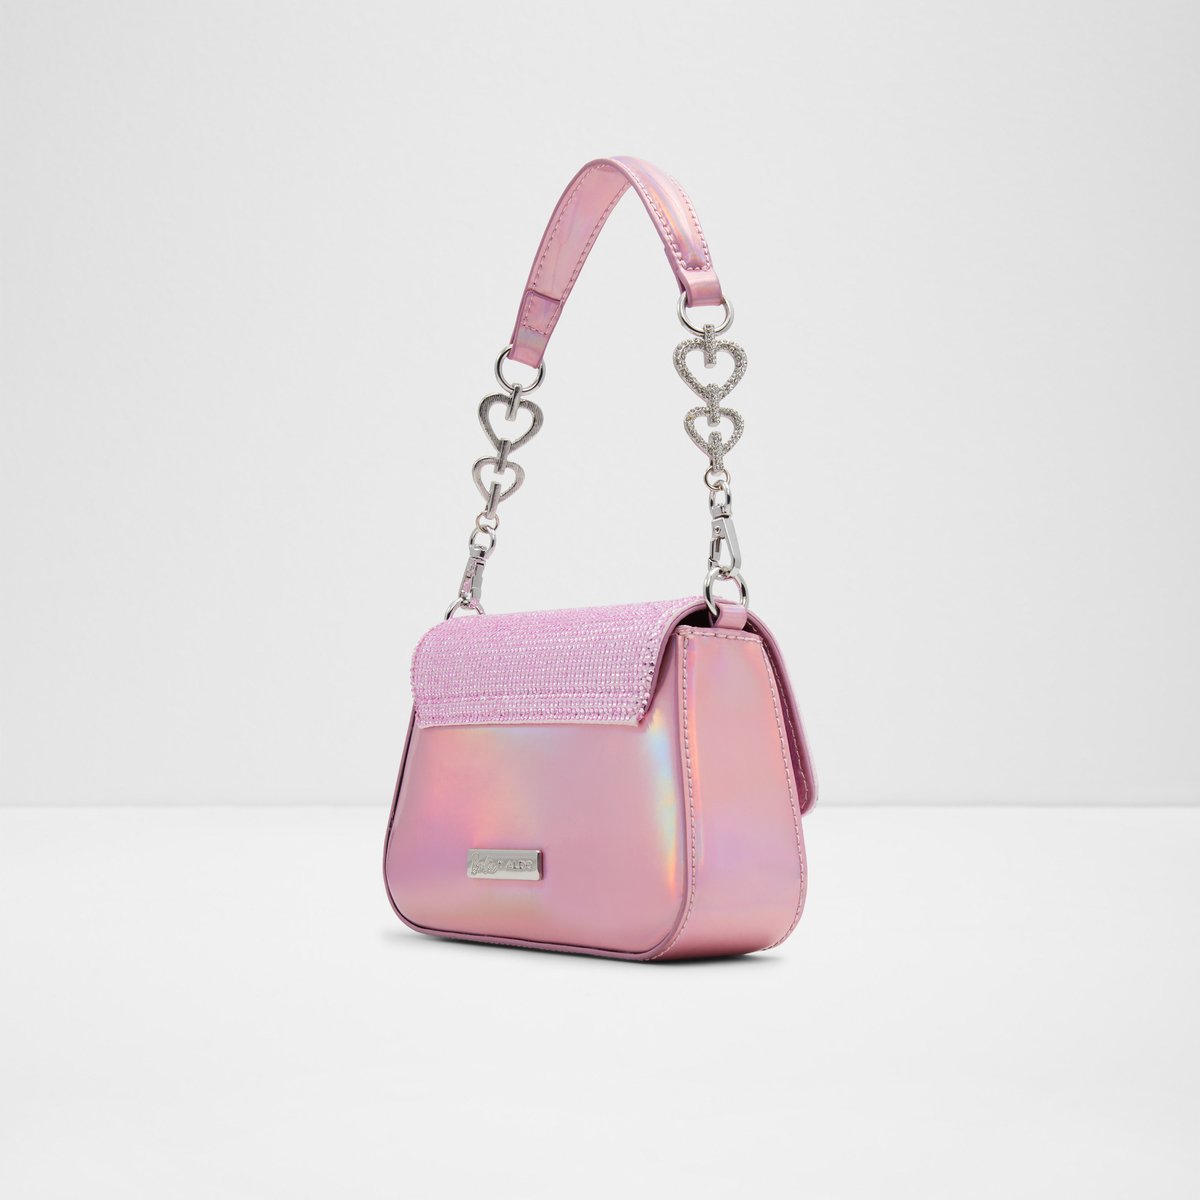 Barbietphndl Bag - Medium Pink - ALDO KSA